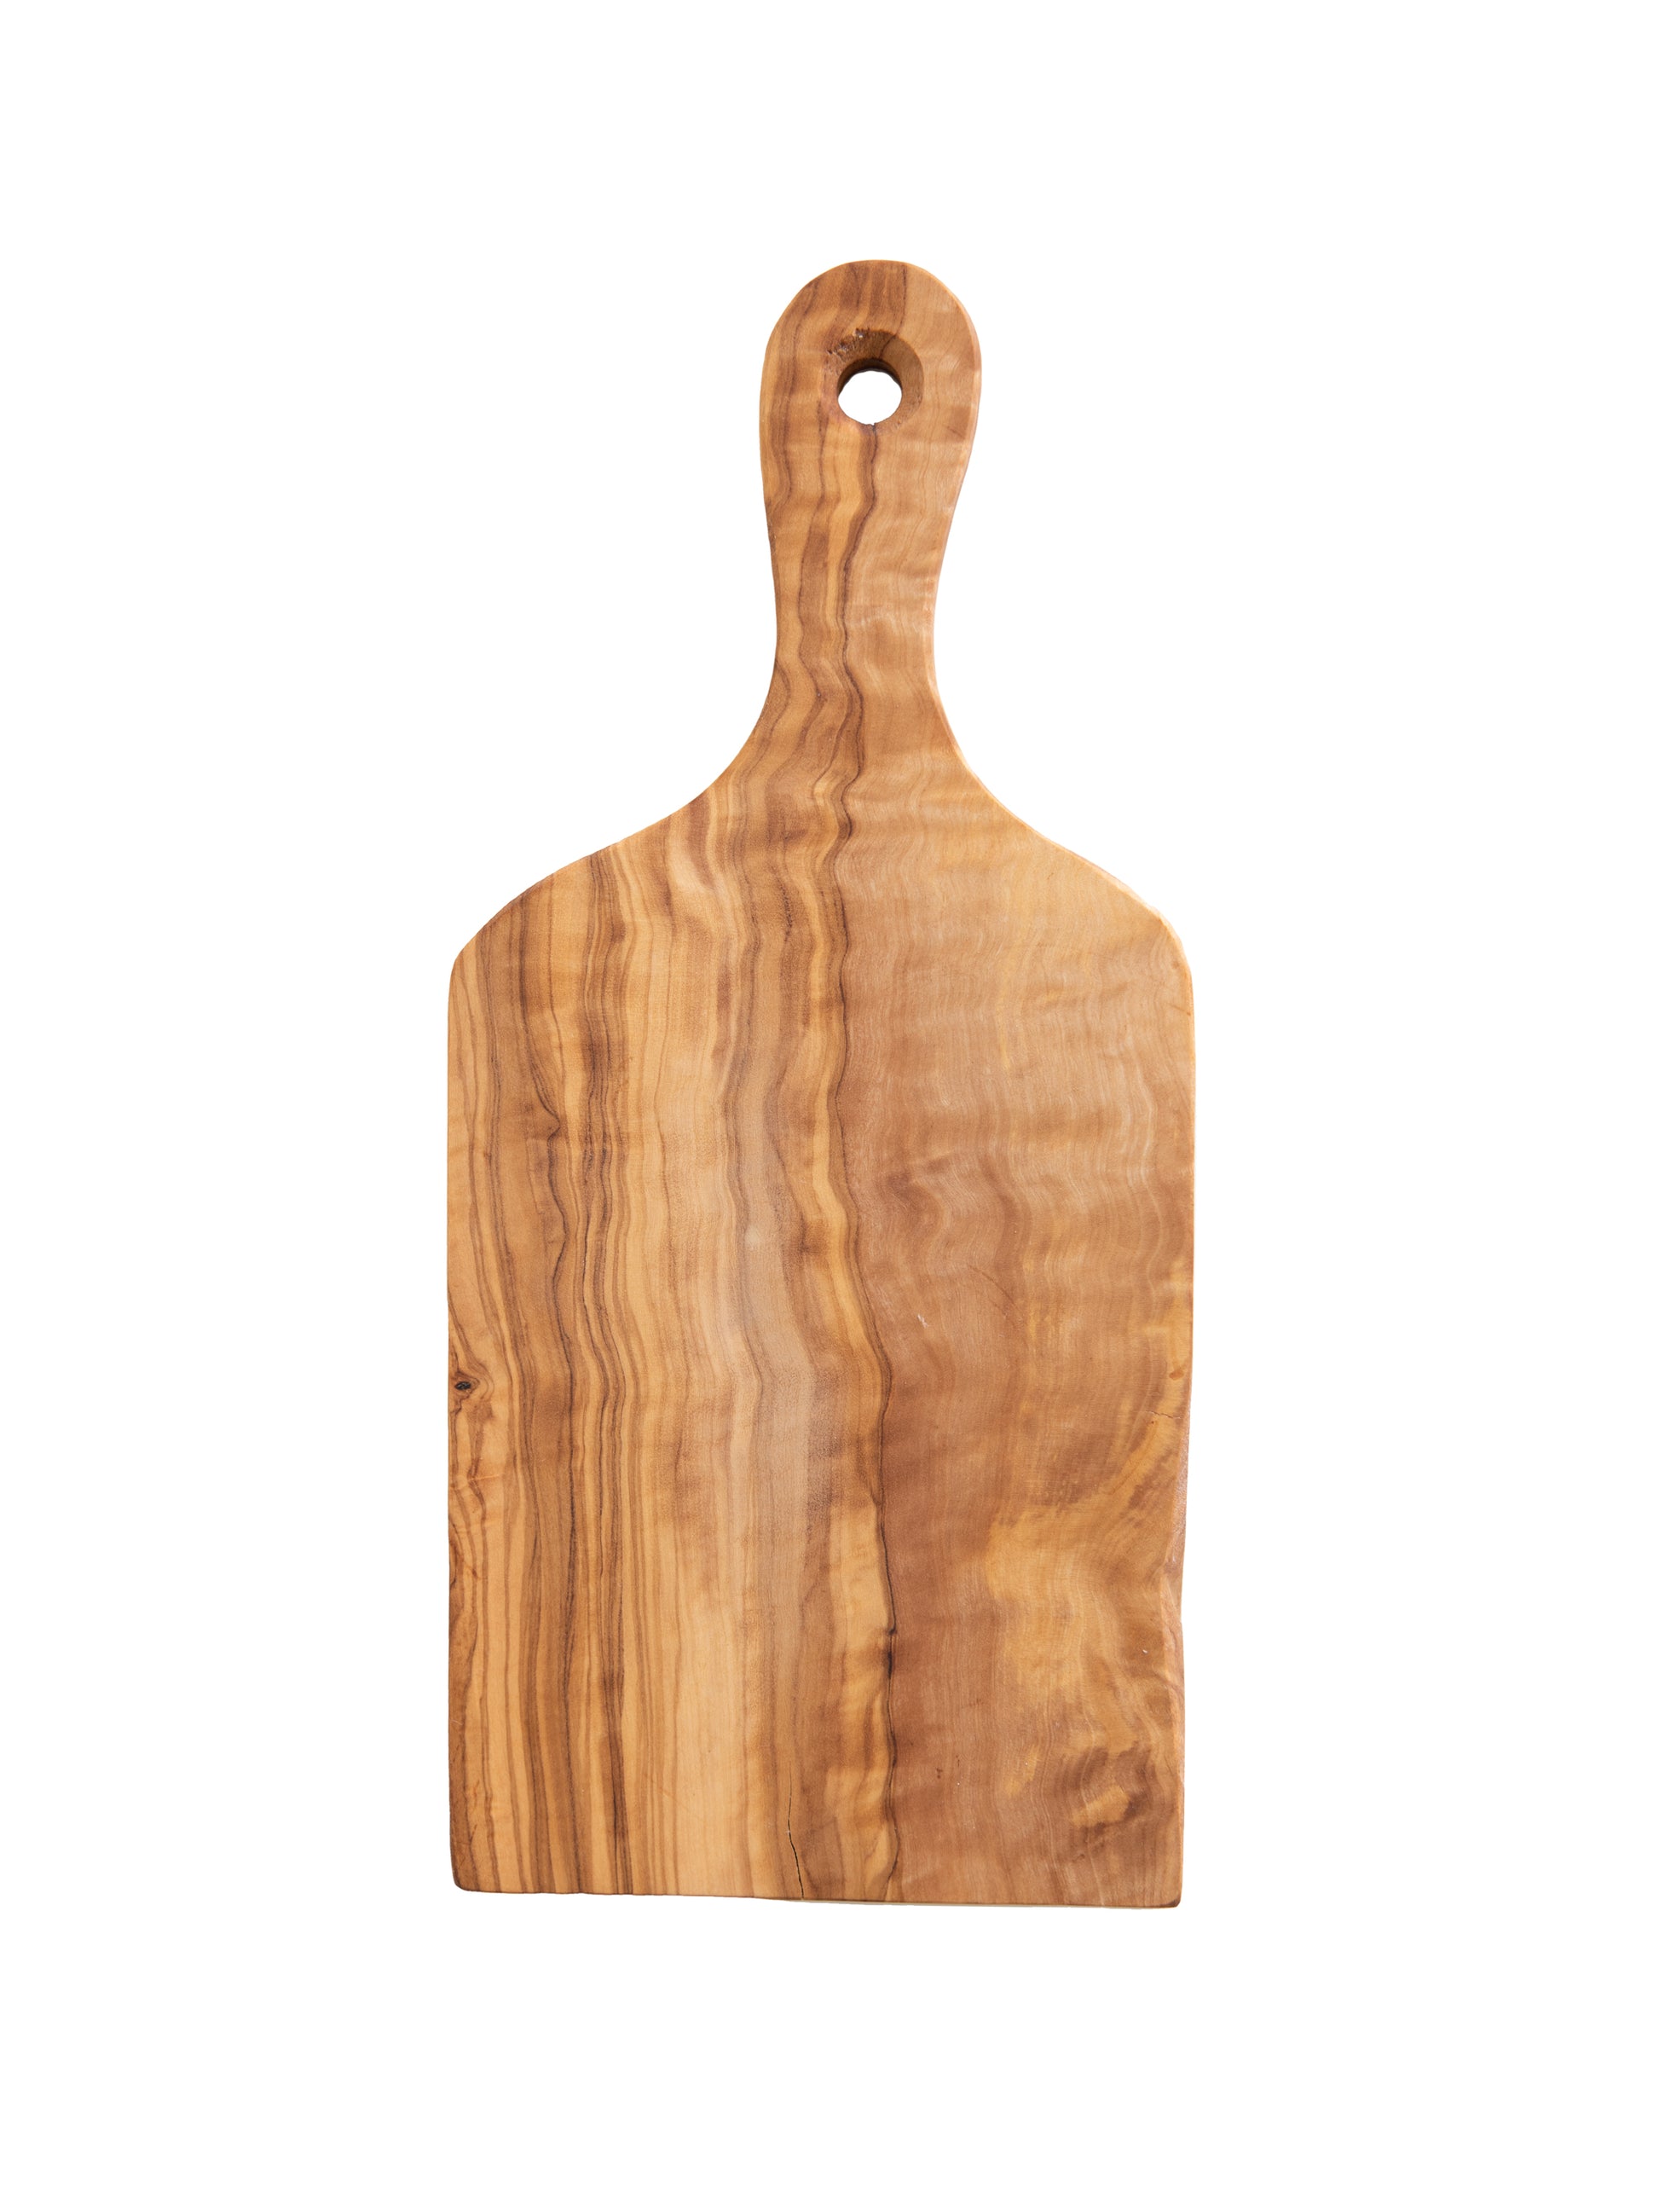 WT Olive Wood Handled Board Weston Table